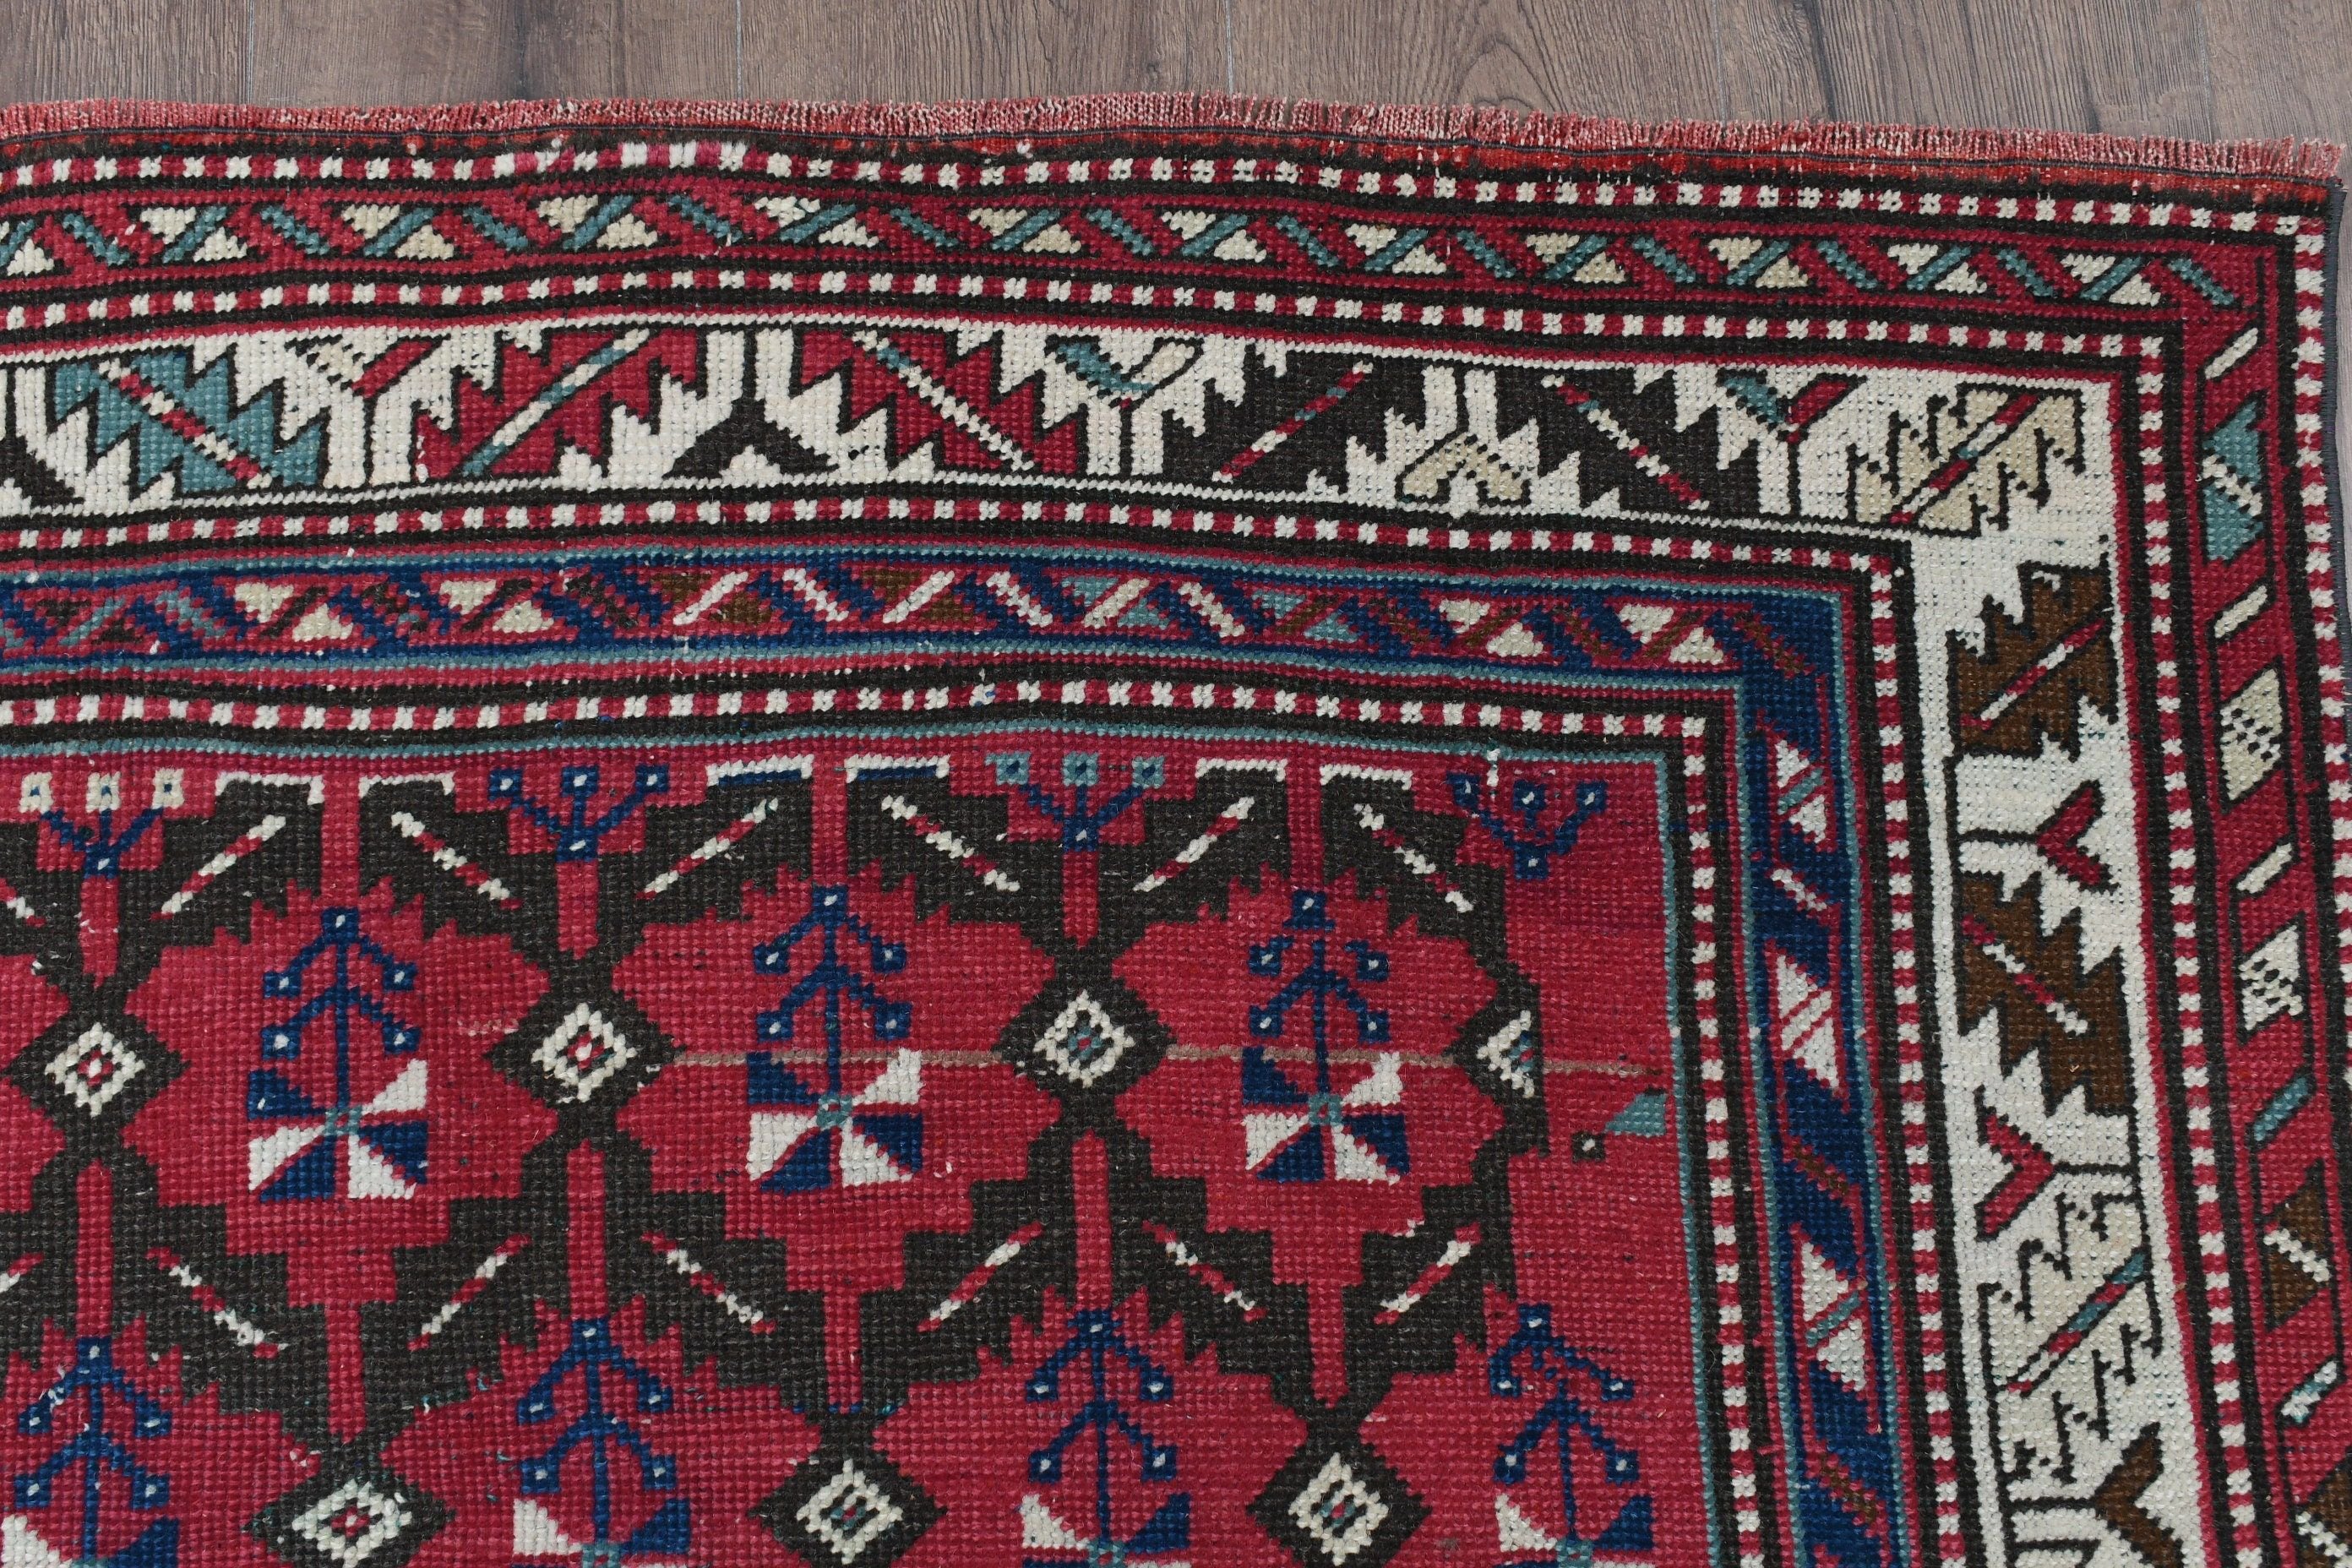 Rugs for Bedroom, Turkish Rug, Wool Rug, Vintage Rug, Dining Room Rugs, 6.2x9.3 ft Large Rug, Moroccan Rug, Red Anatolian Rug, Bedroom Rug